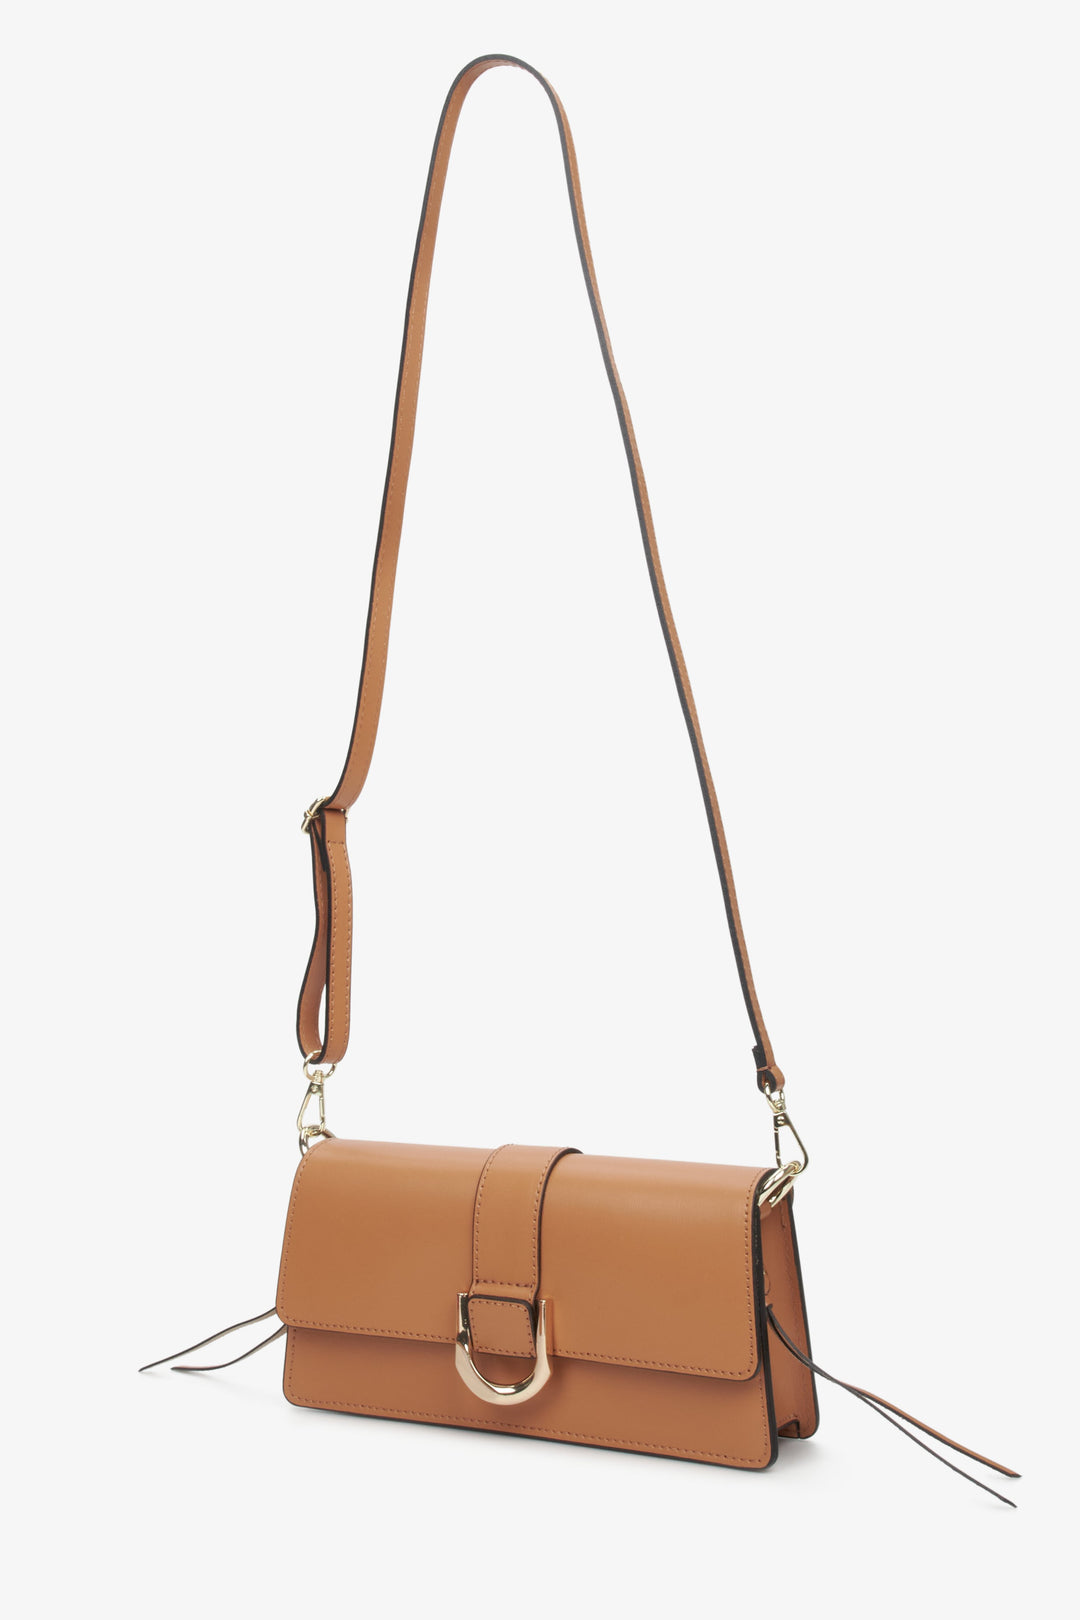 Women's brown leather handbag Estro made of genuine leaather.